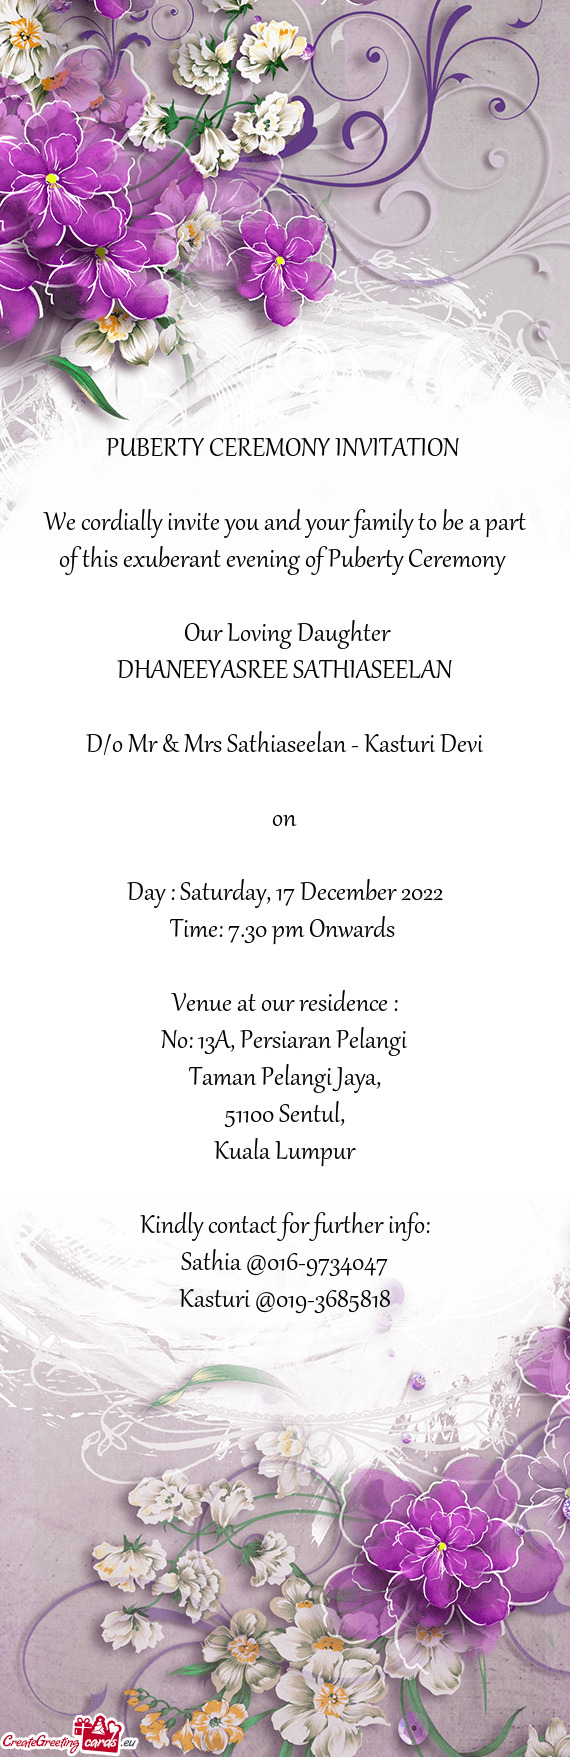 D/o Mr & Mrs Sathiaseelan - Kasturi Devi